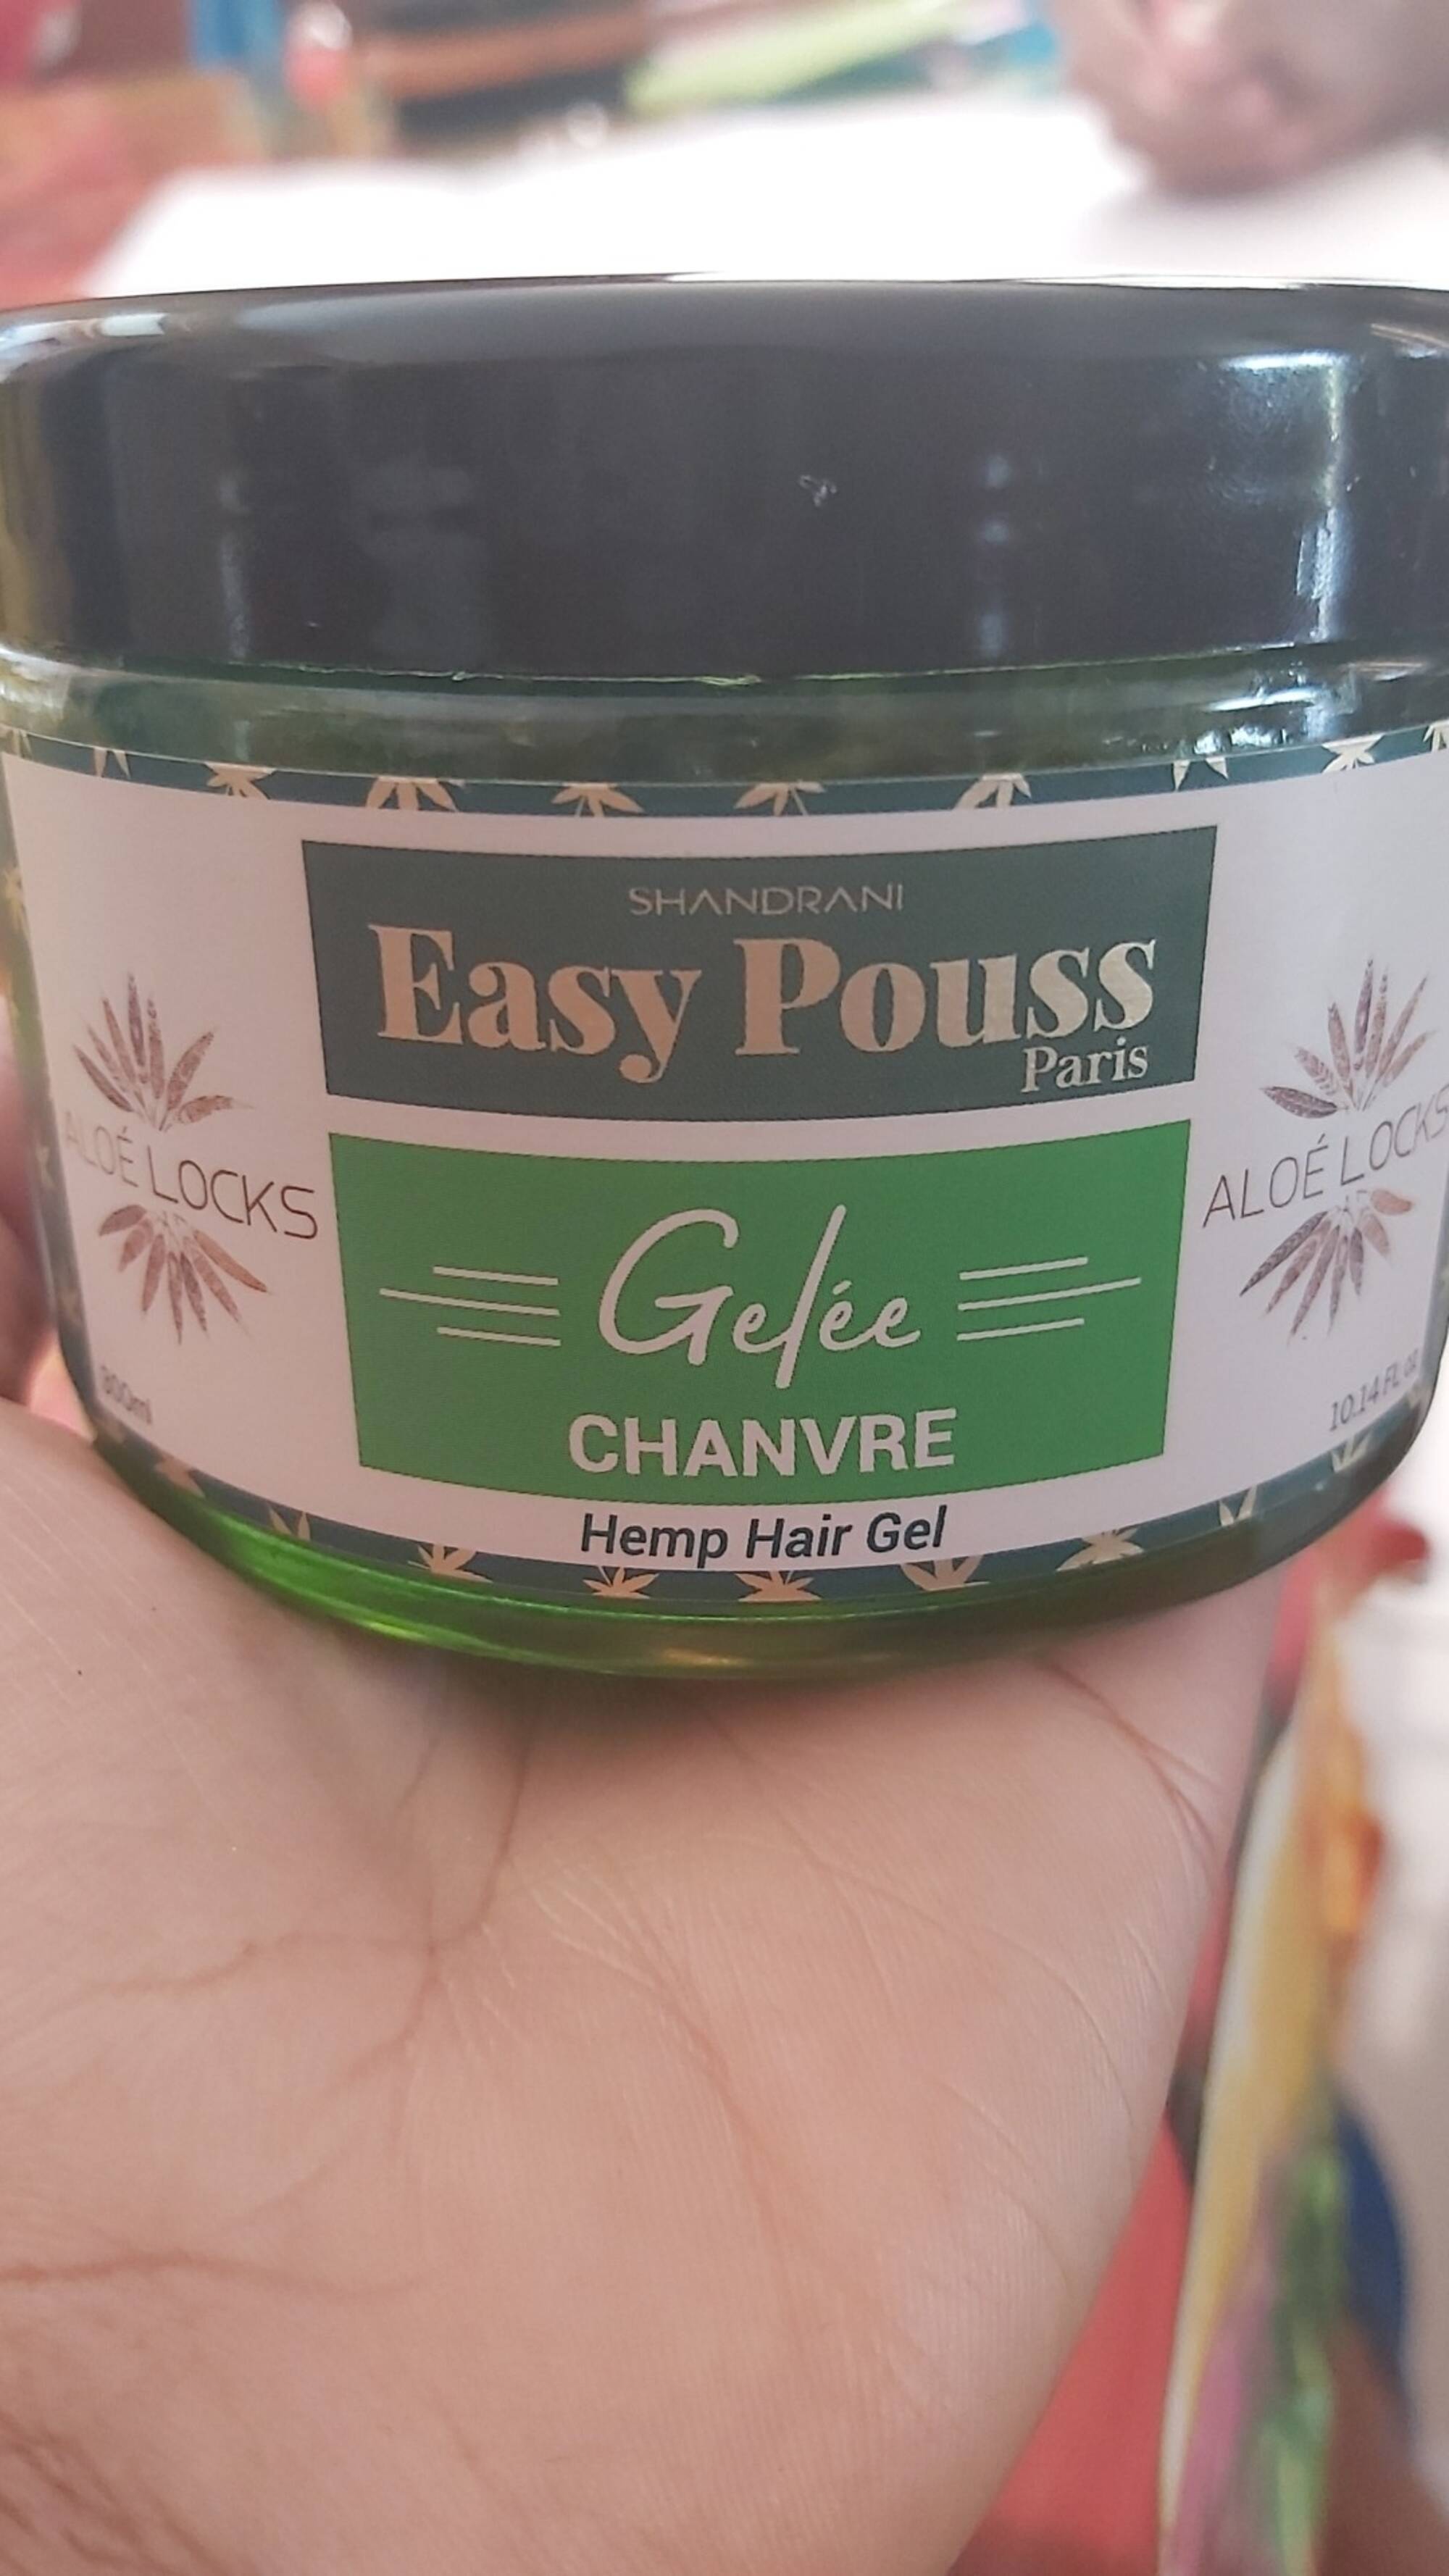 EASY POUSS - Gelée chanvre - Hemp hair gel